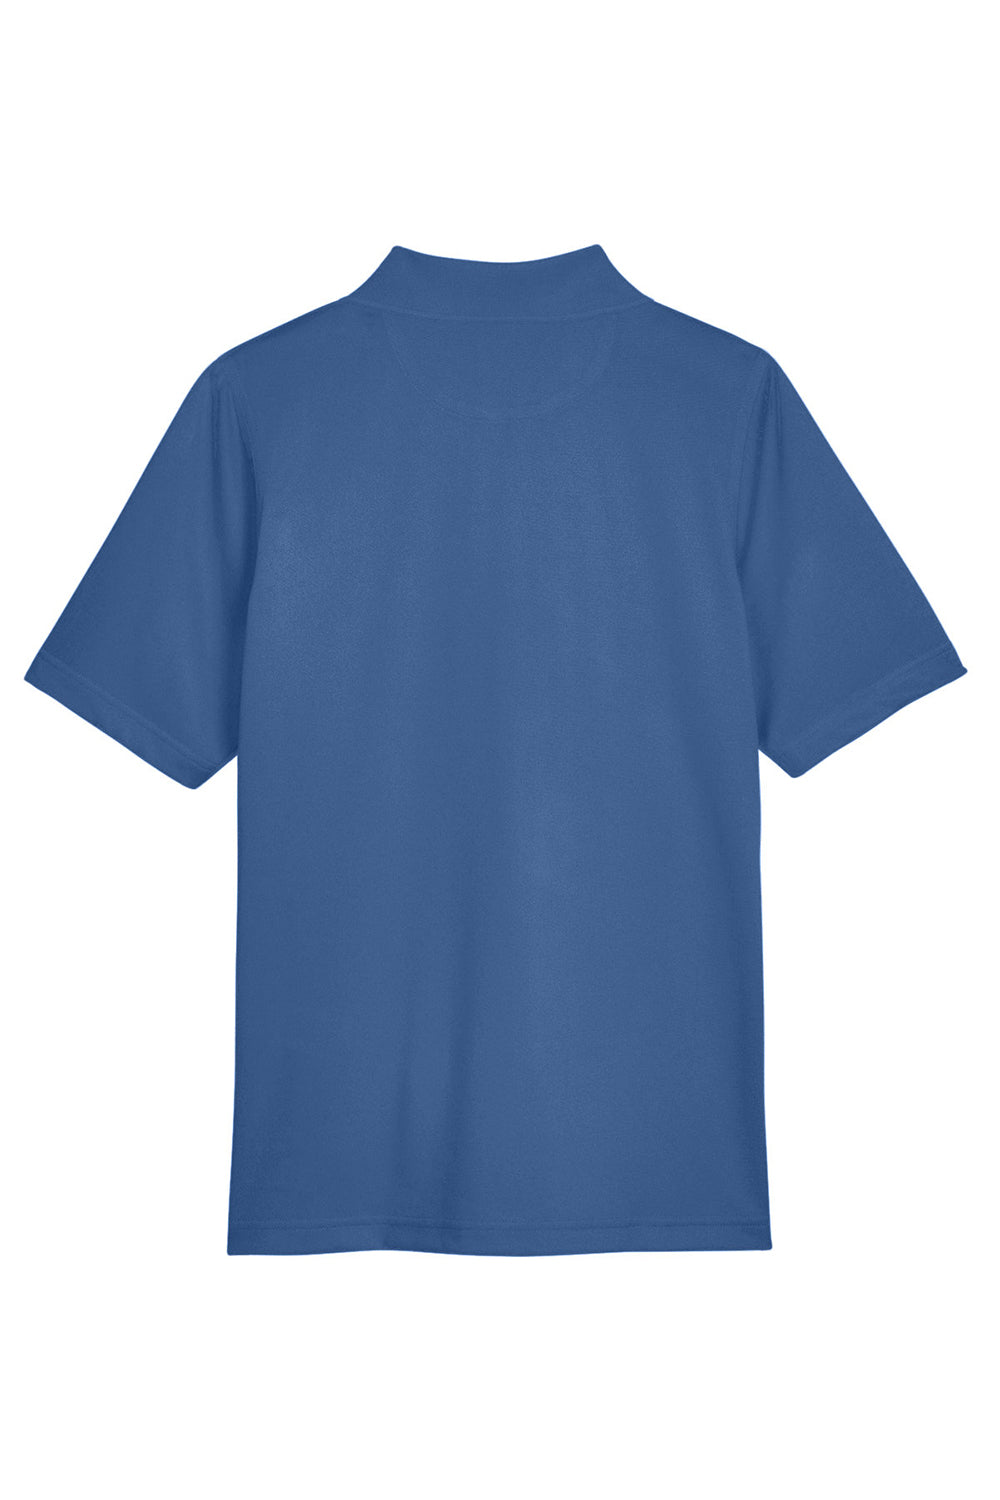 Harriton M348W Womens Advantage Performance Moisture Wicking Short Sleeve Polo Shirt Pool Blue Flat Back